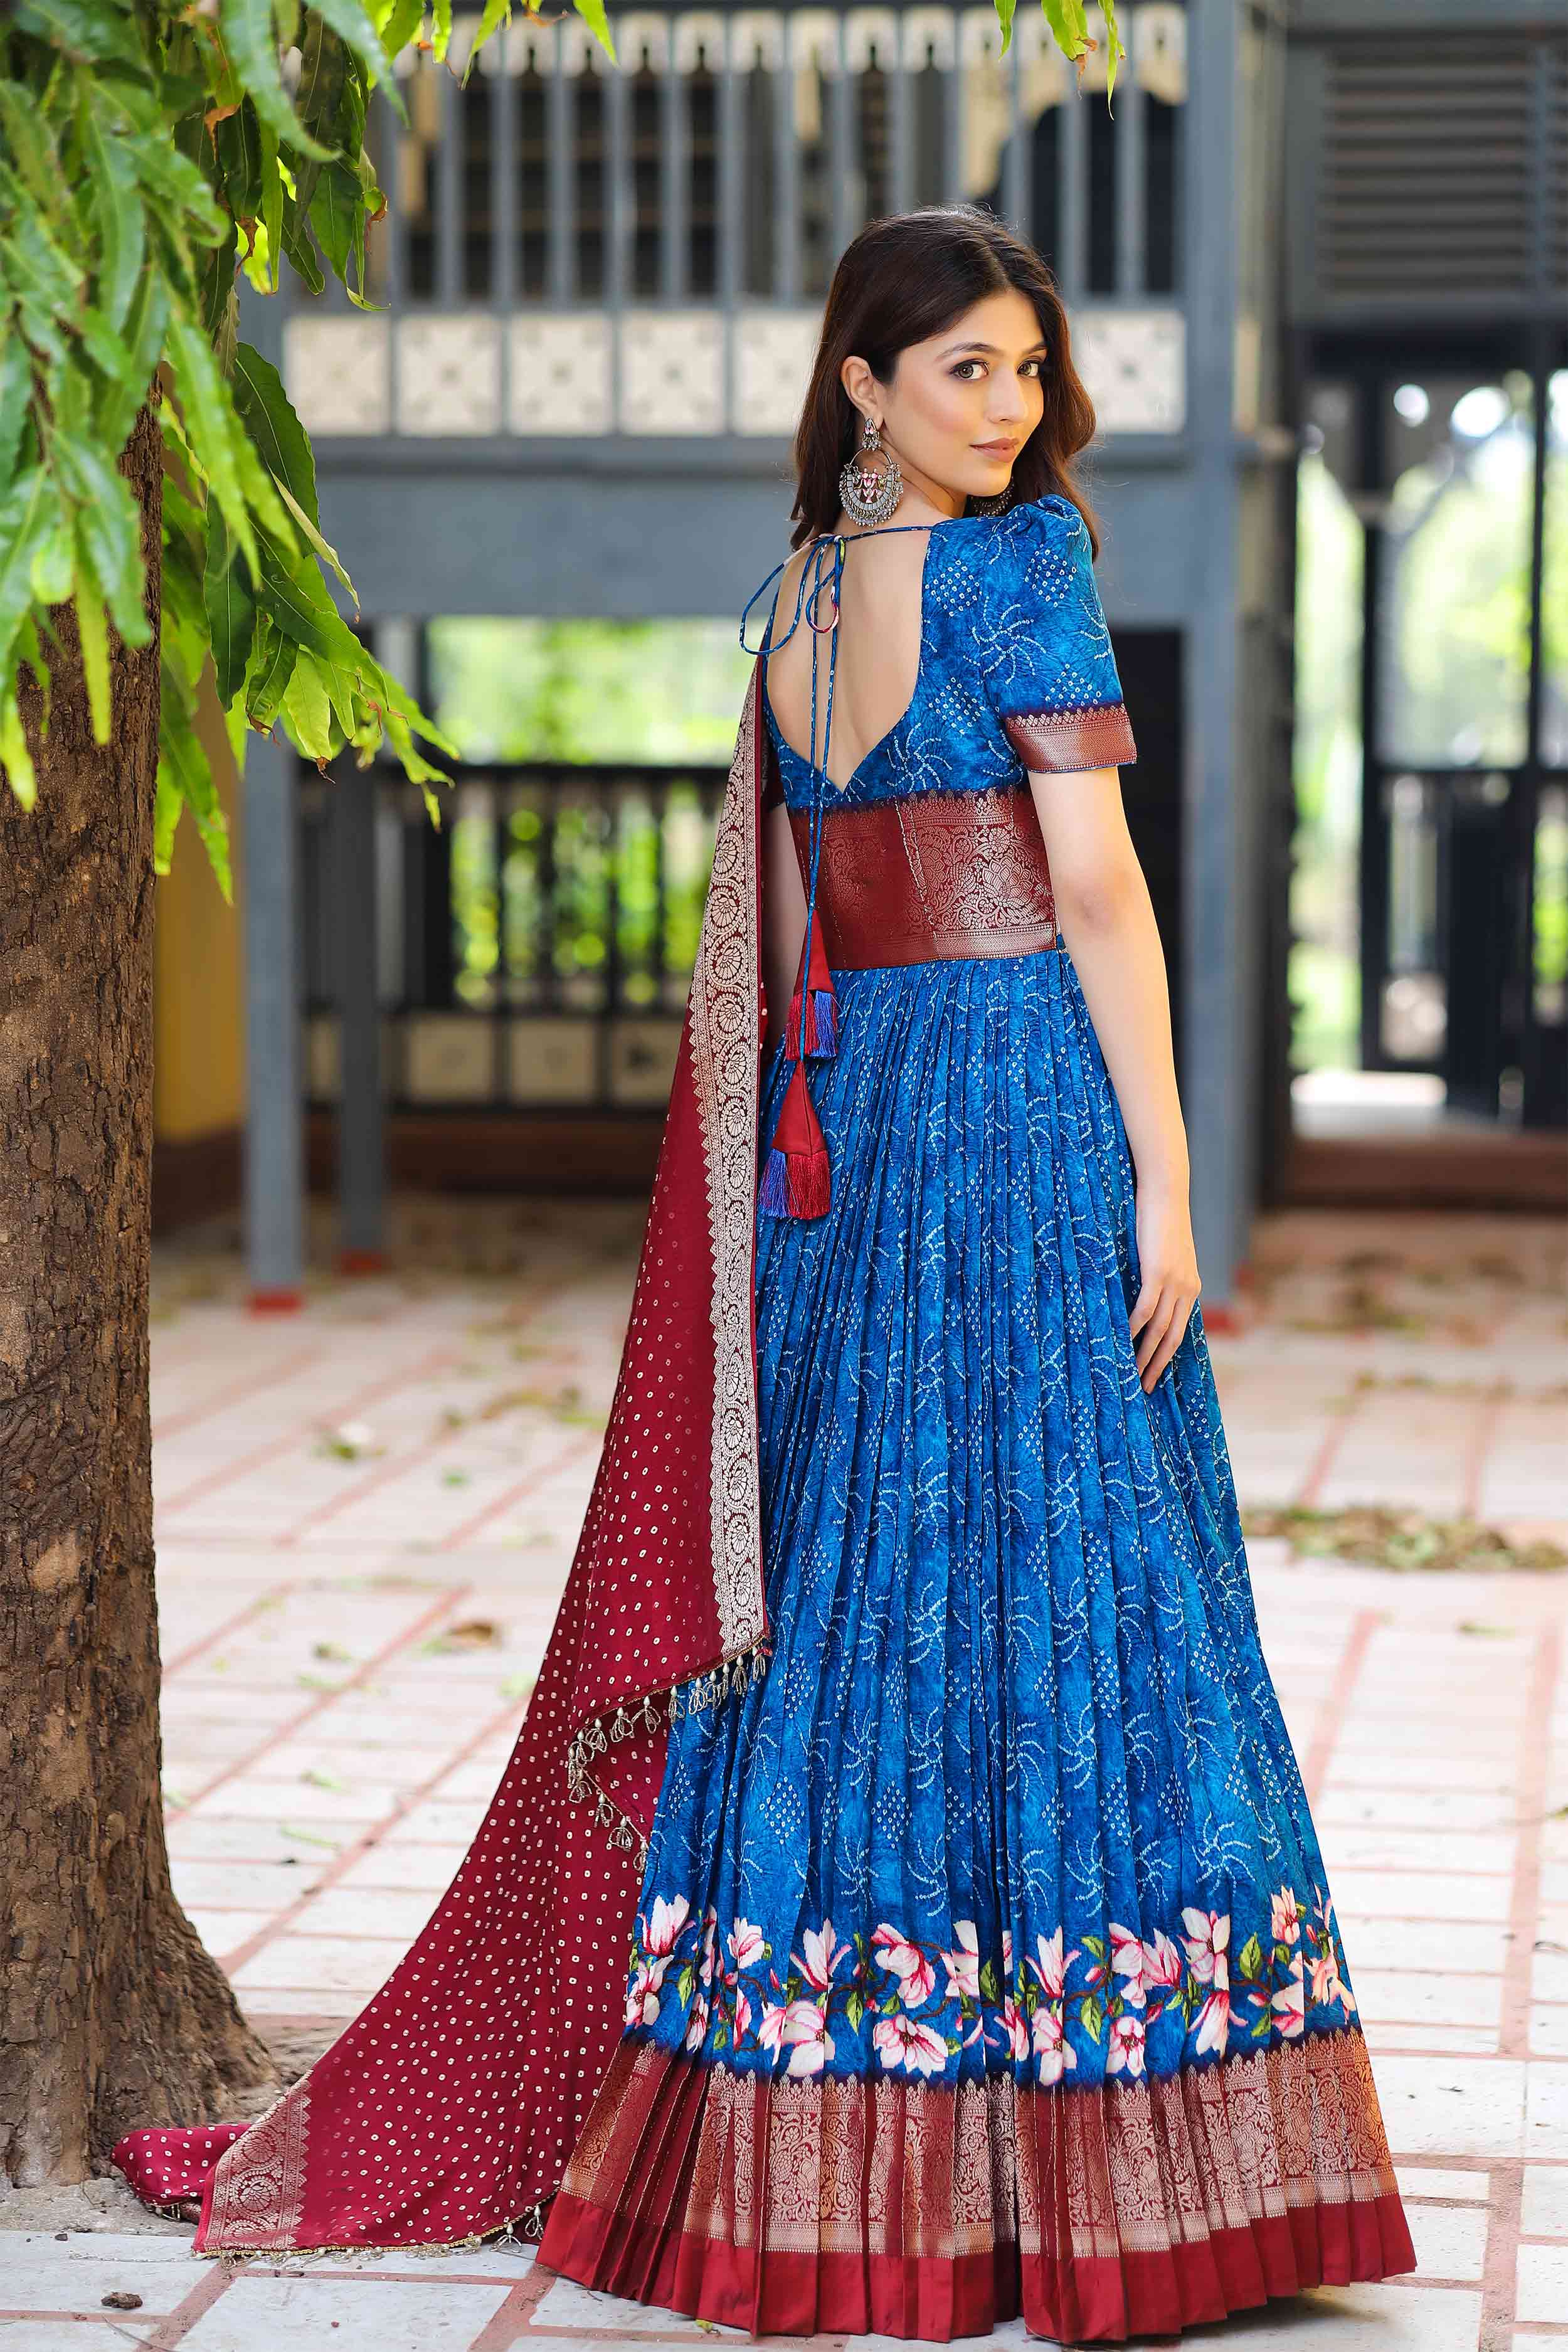 a woman in blue banarasi dress